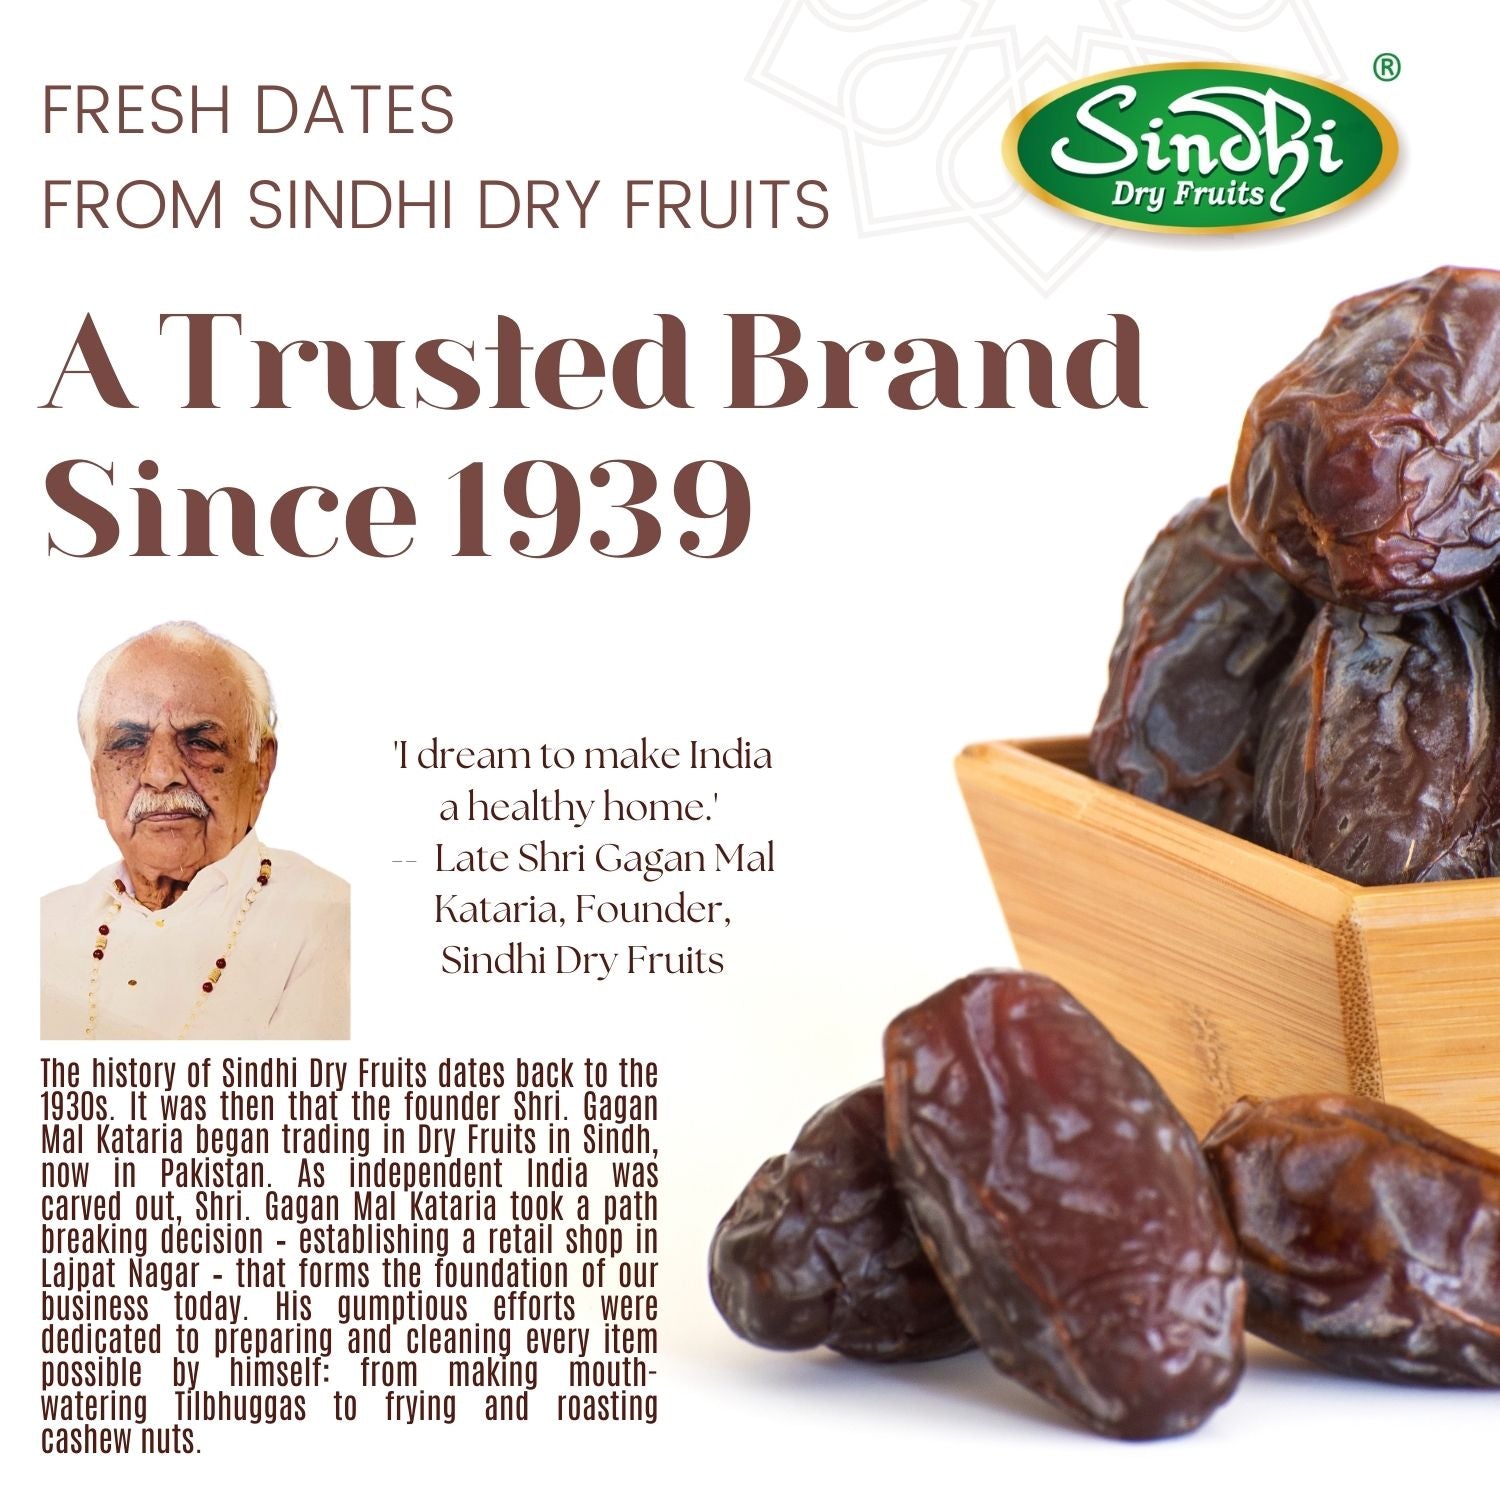  Get Aajwa dates at Sindhi Dry Fruits online store